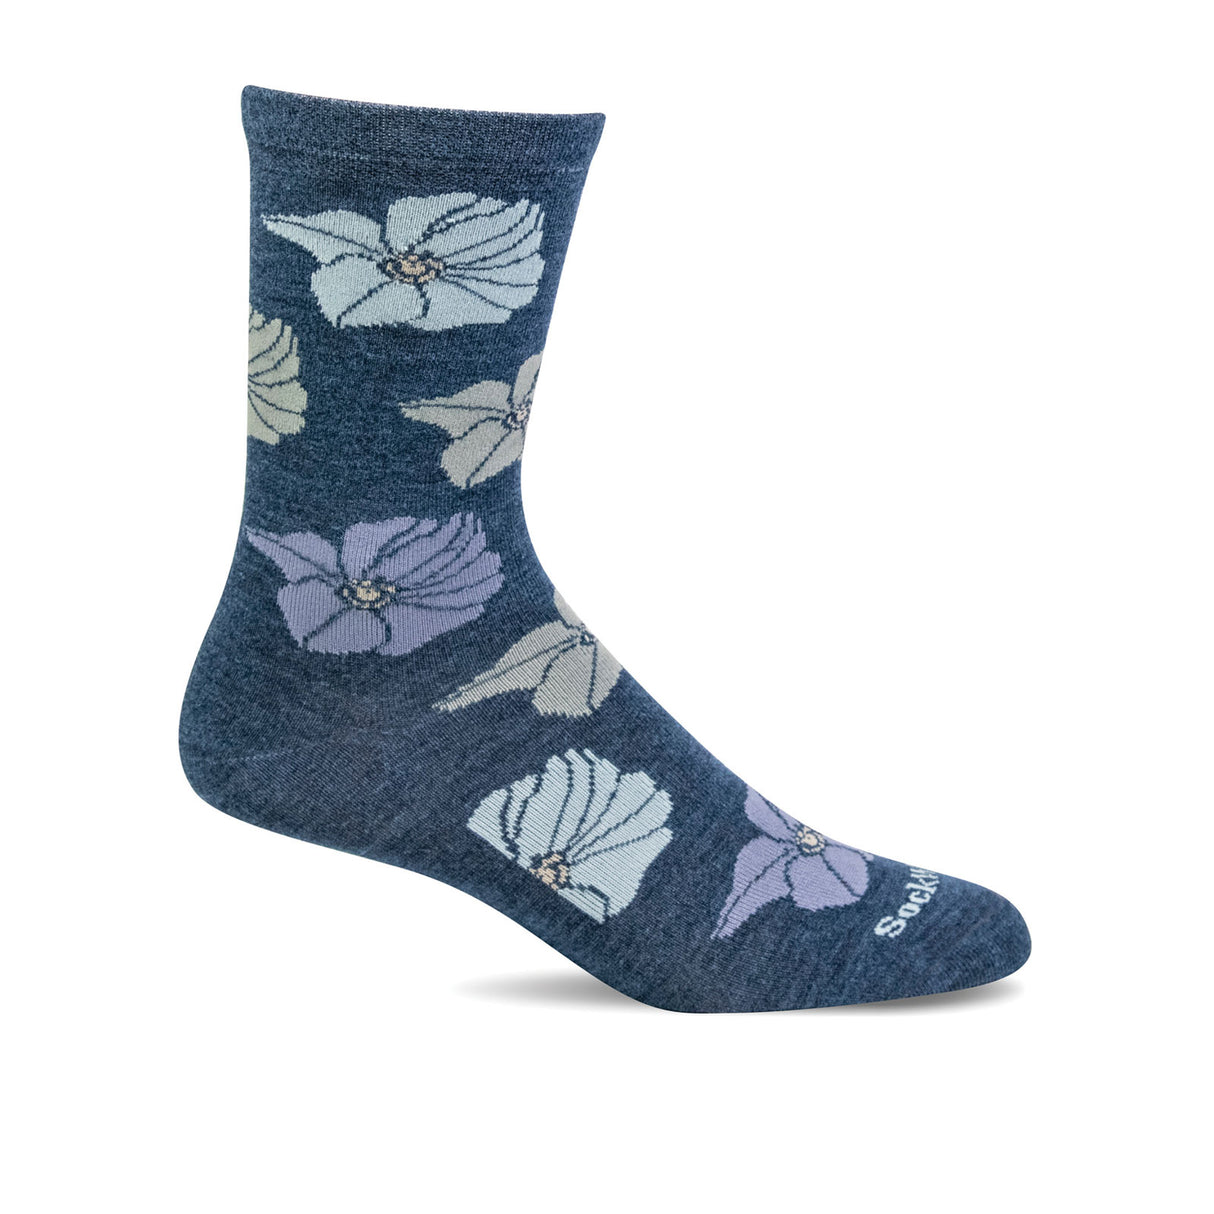 Sockwell Big Bloom Crew Sock (Women) - Denim Accessories - Socks - Lifestyle - The Heel Shoe Fitters